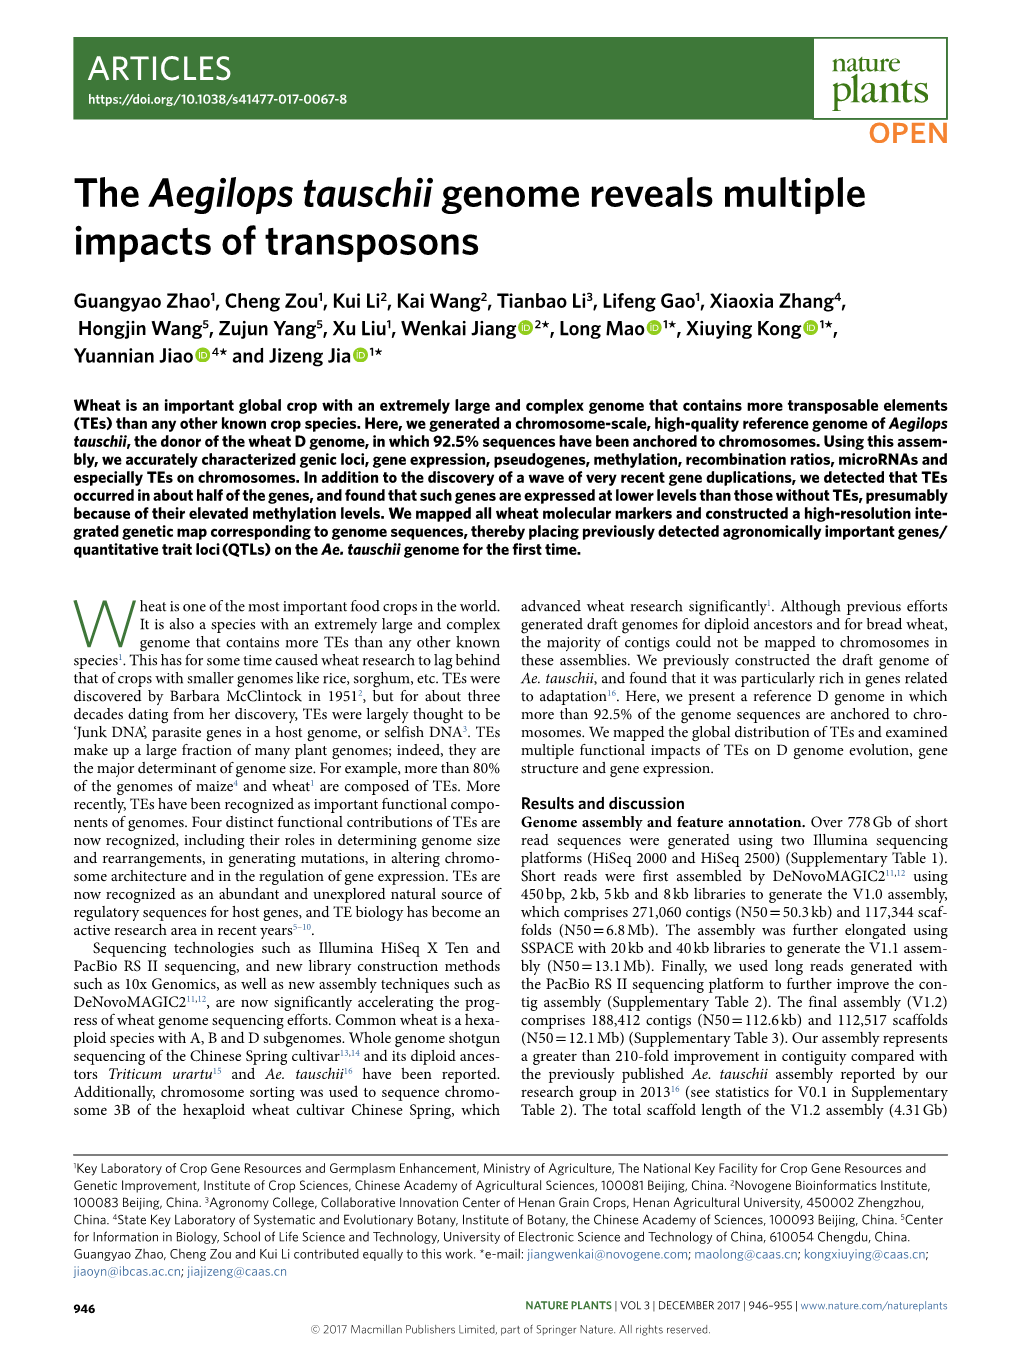 The Aegilops Tauschii Genome Reveals Multiple Impacts of Transposons